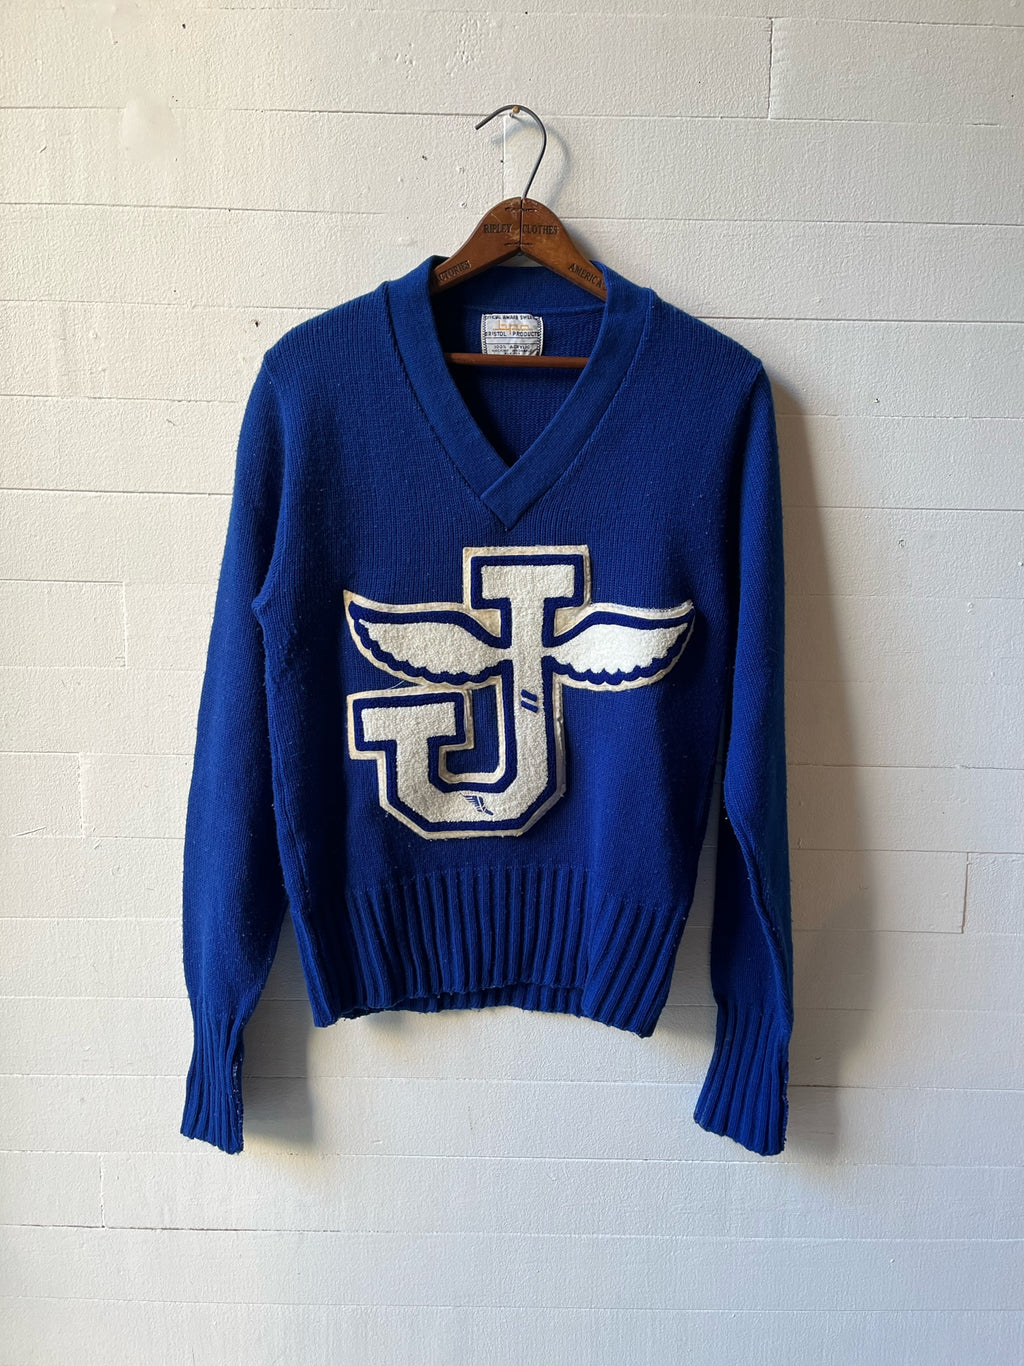 Jesuit Letter Sweater